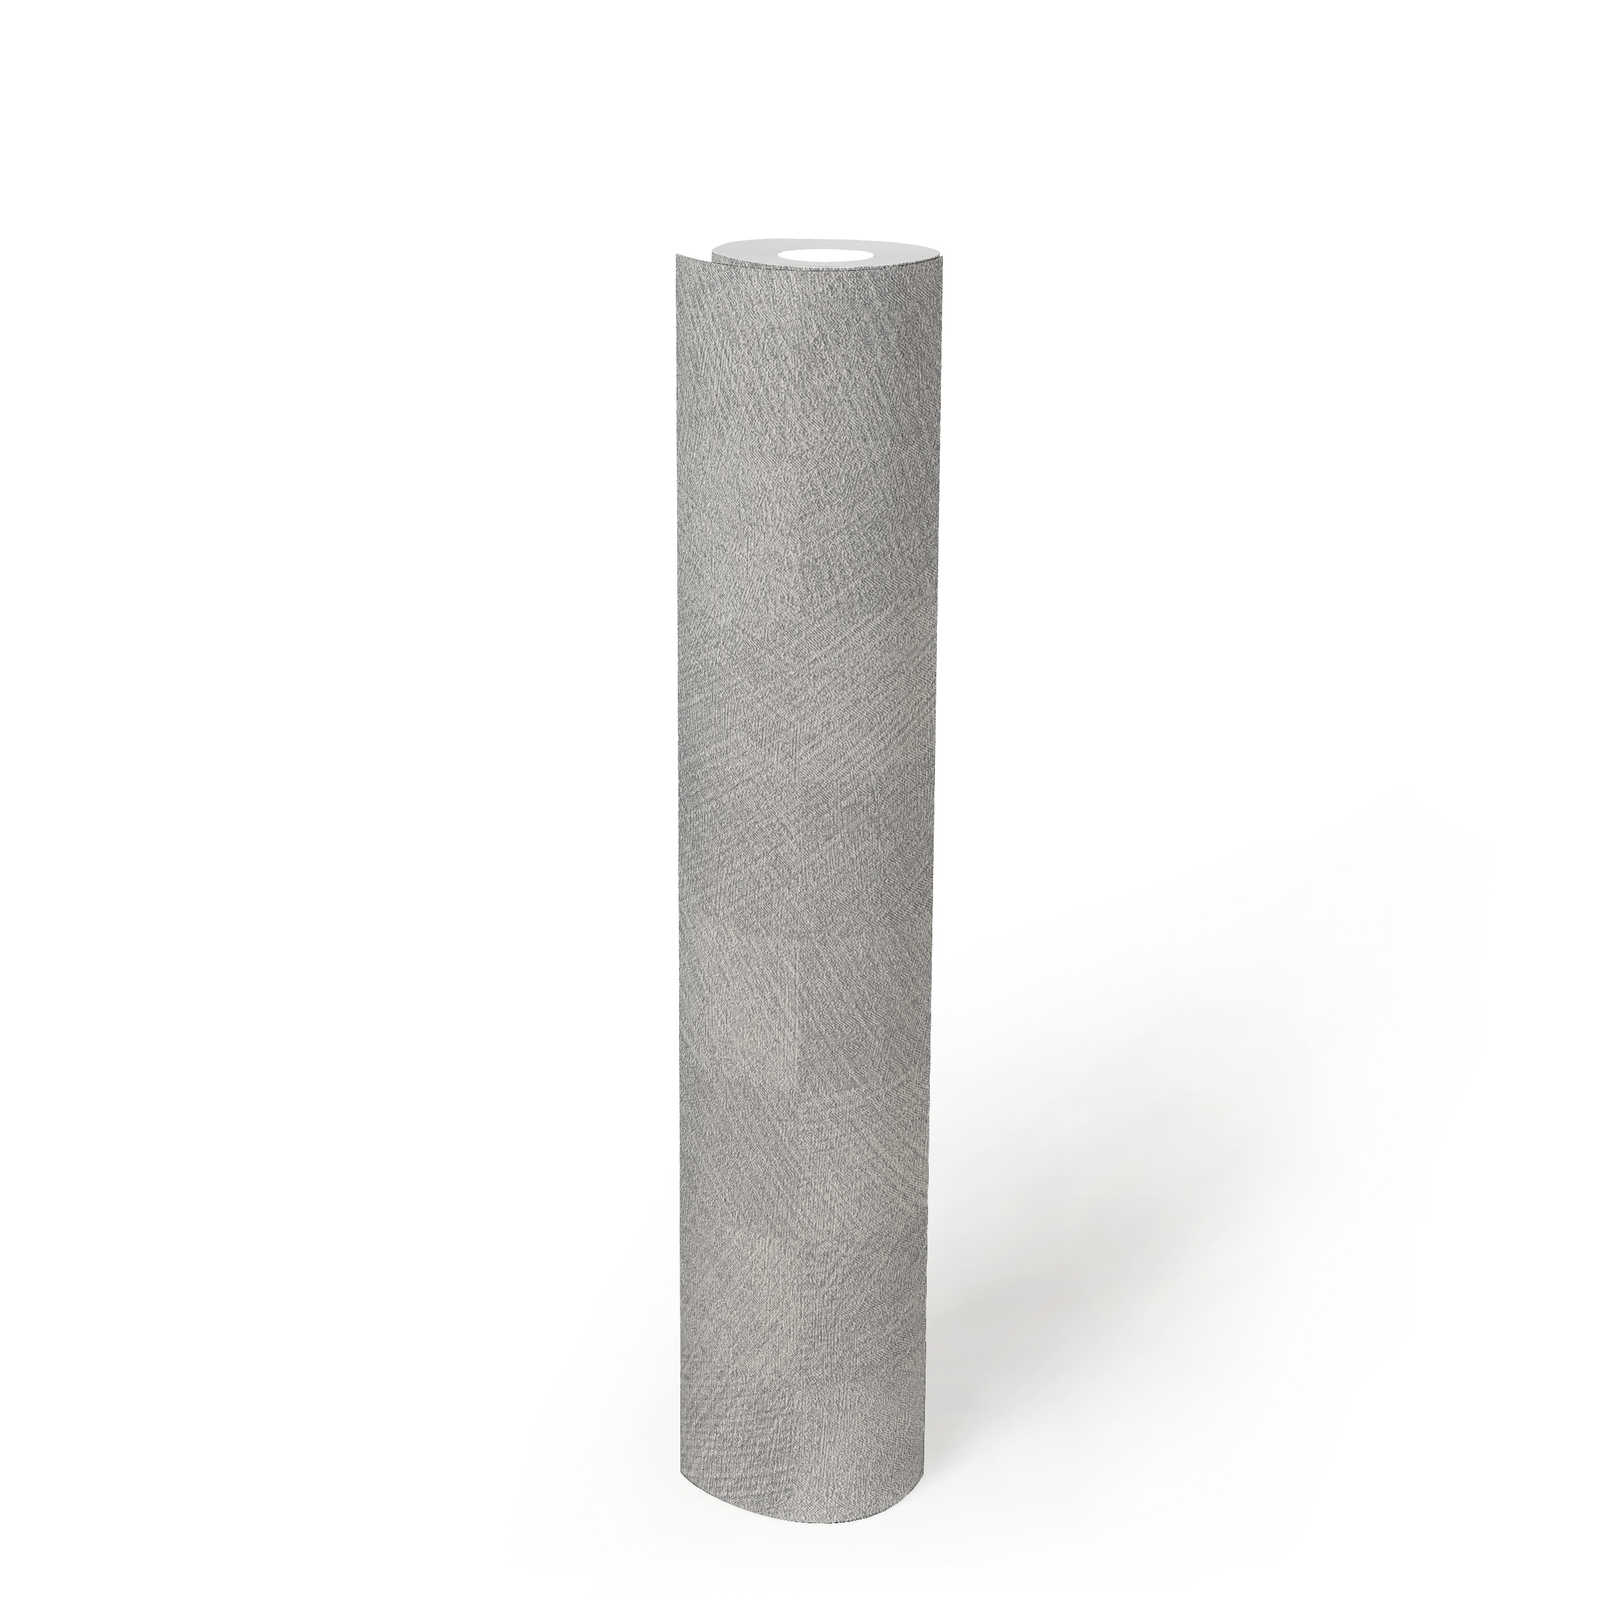             Glänzende Tapete Stahlgrau mit Karomuster – Grau
        